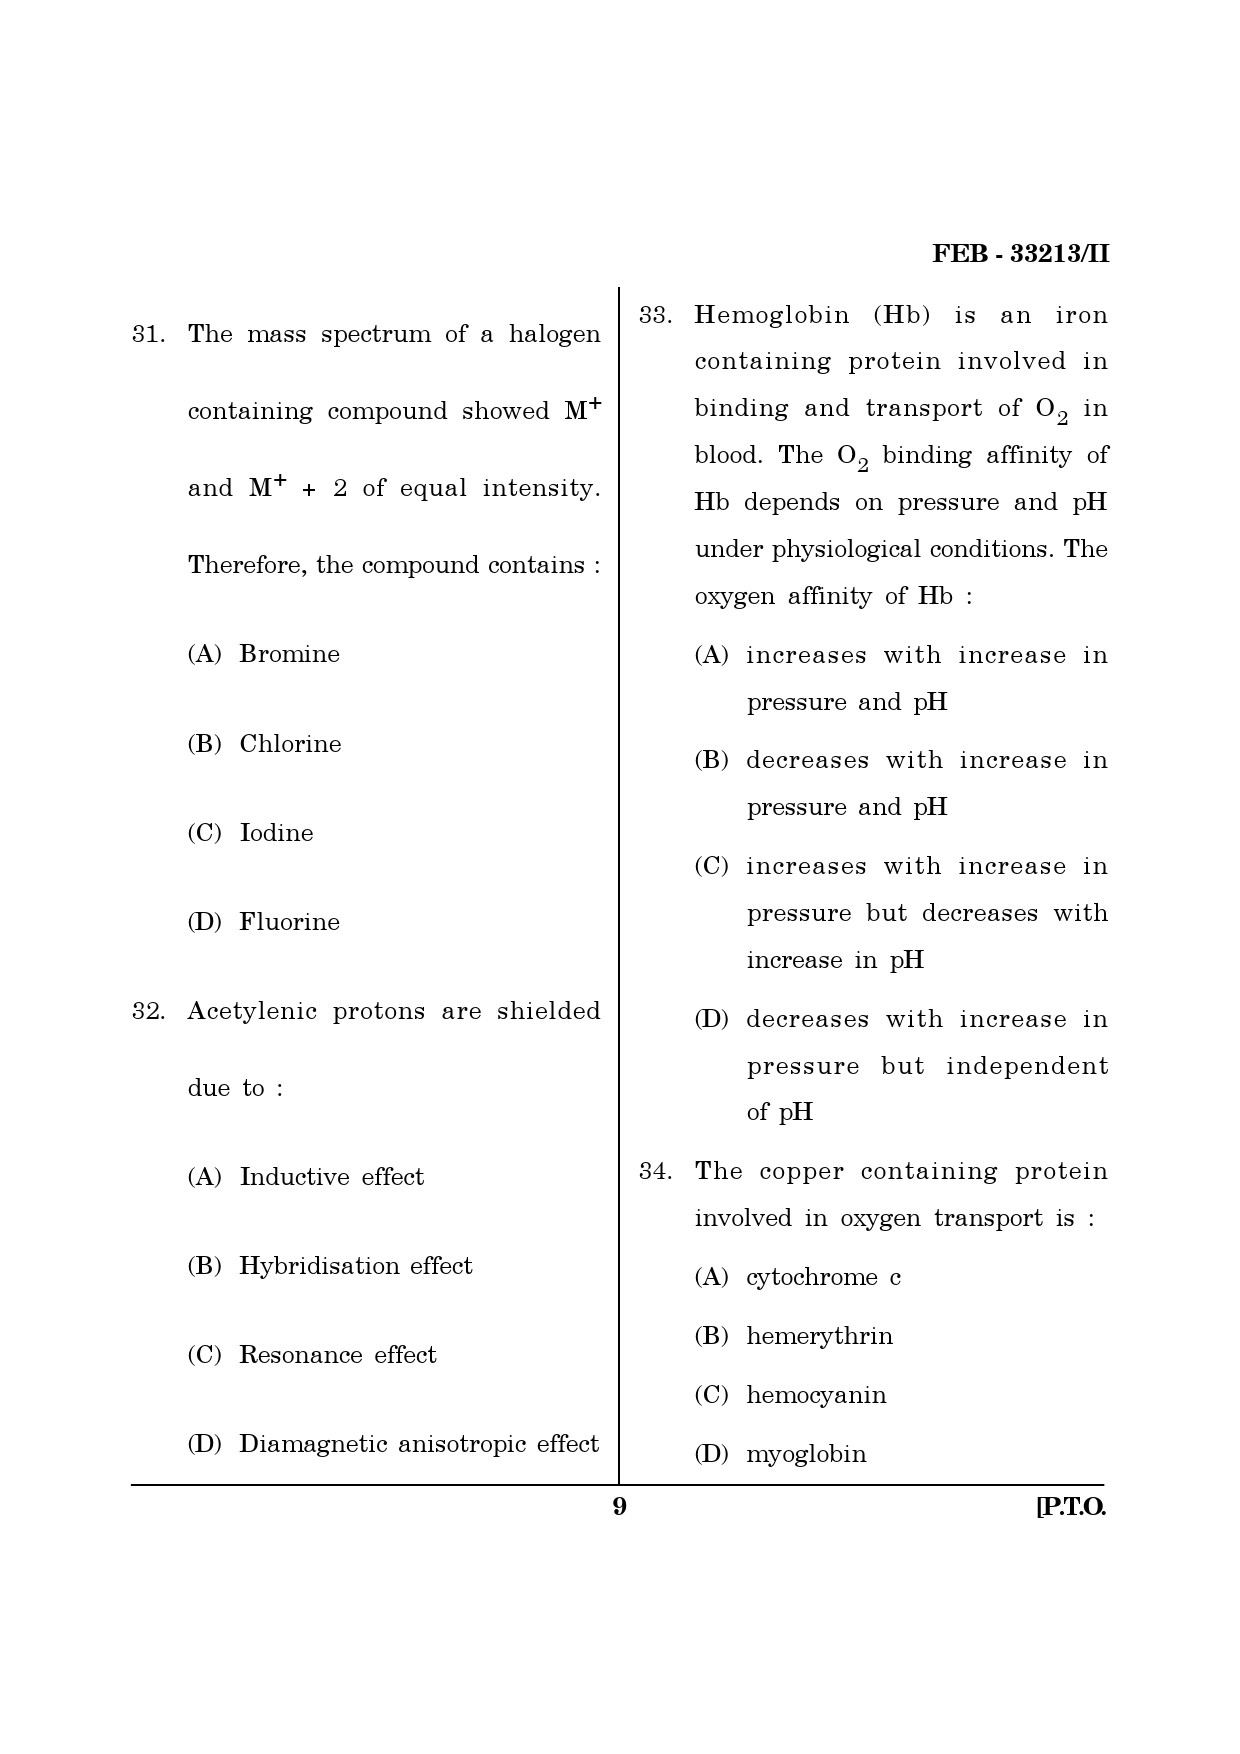 Maharashtra SET Chemical Sciences Question Paper II February 2013 9